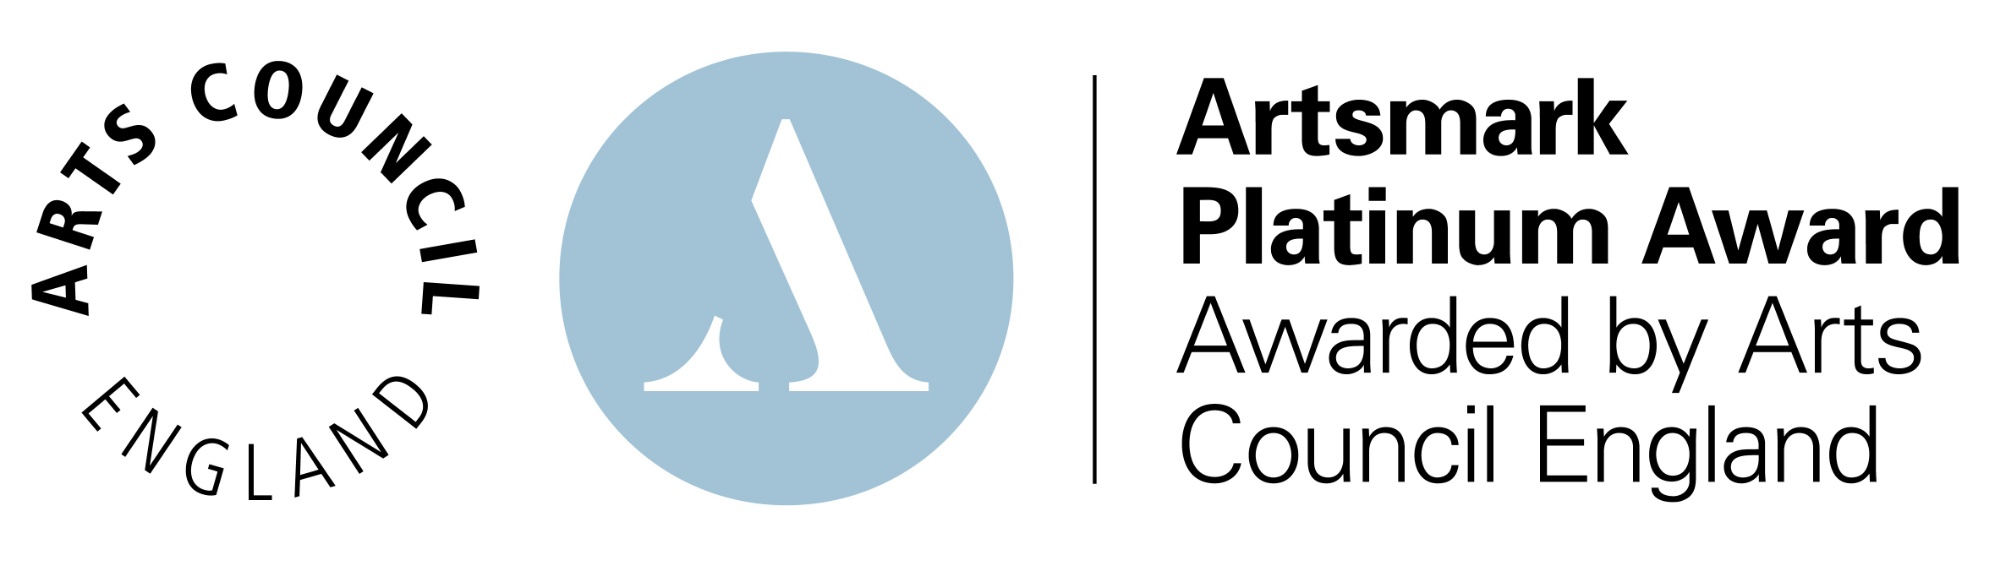 Artsmark Platinum Award